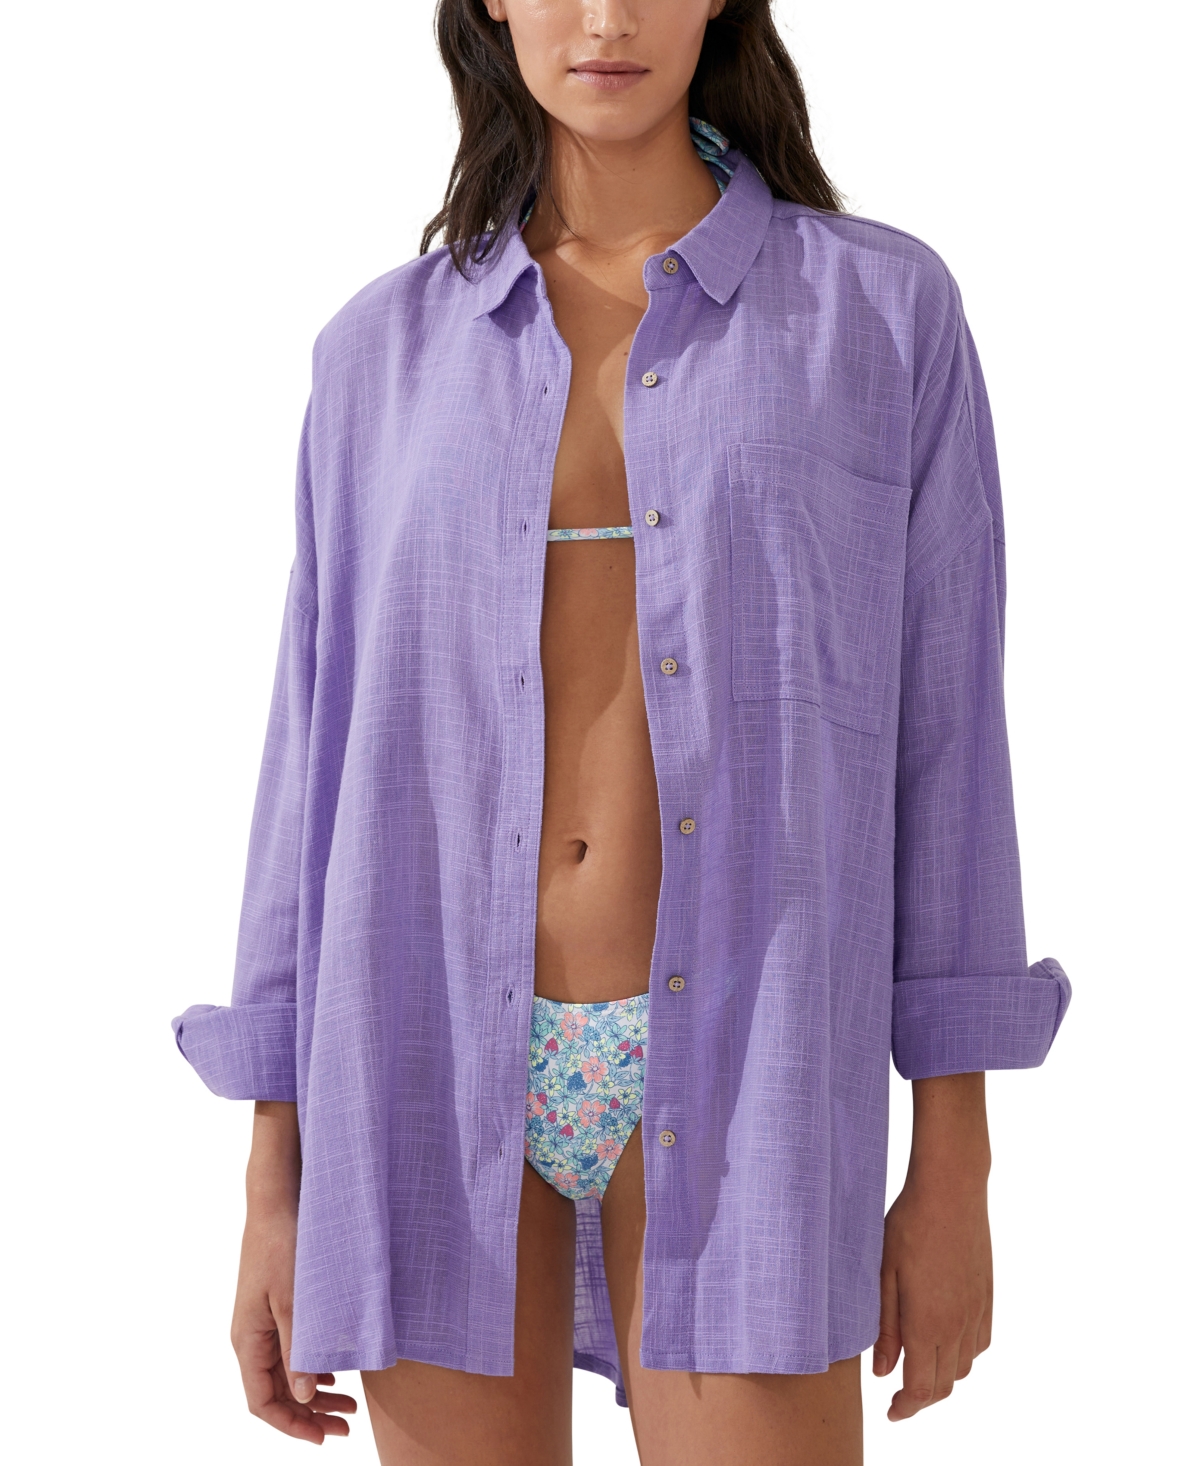 Women's Swing Beach Cover Up Shirt - Purple